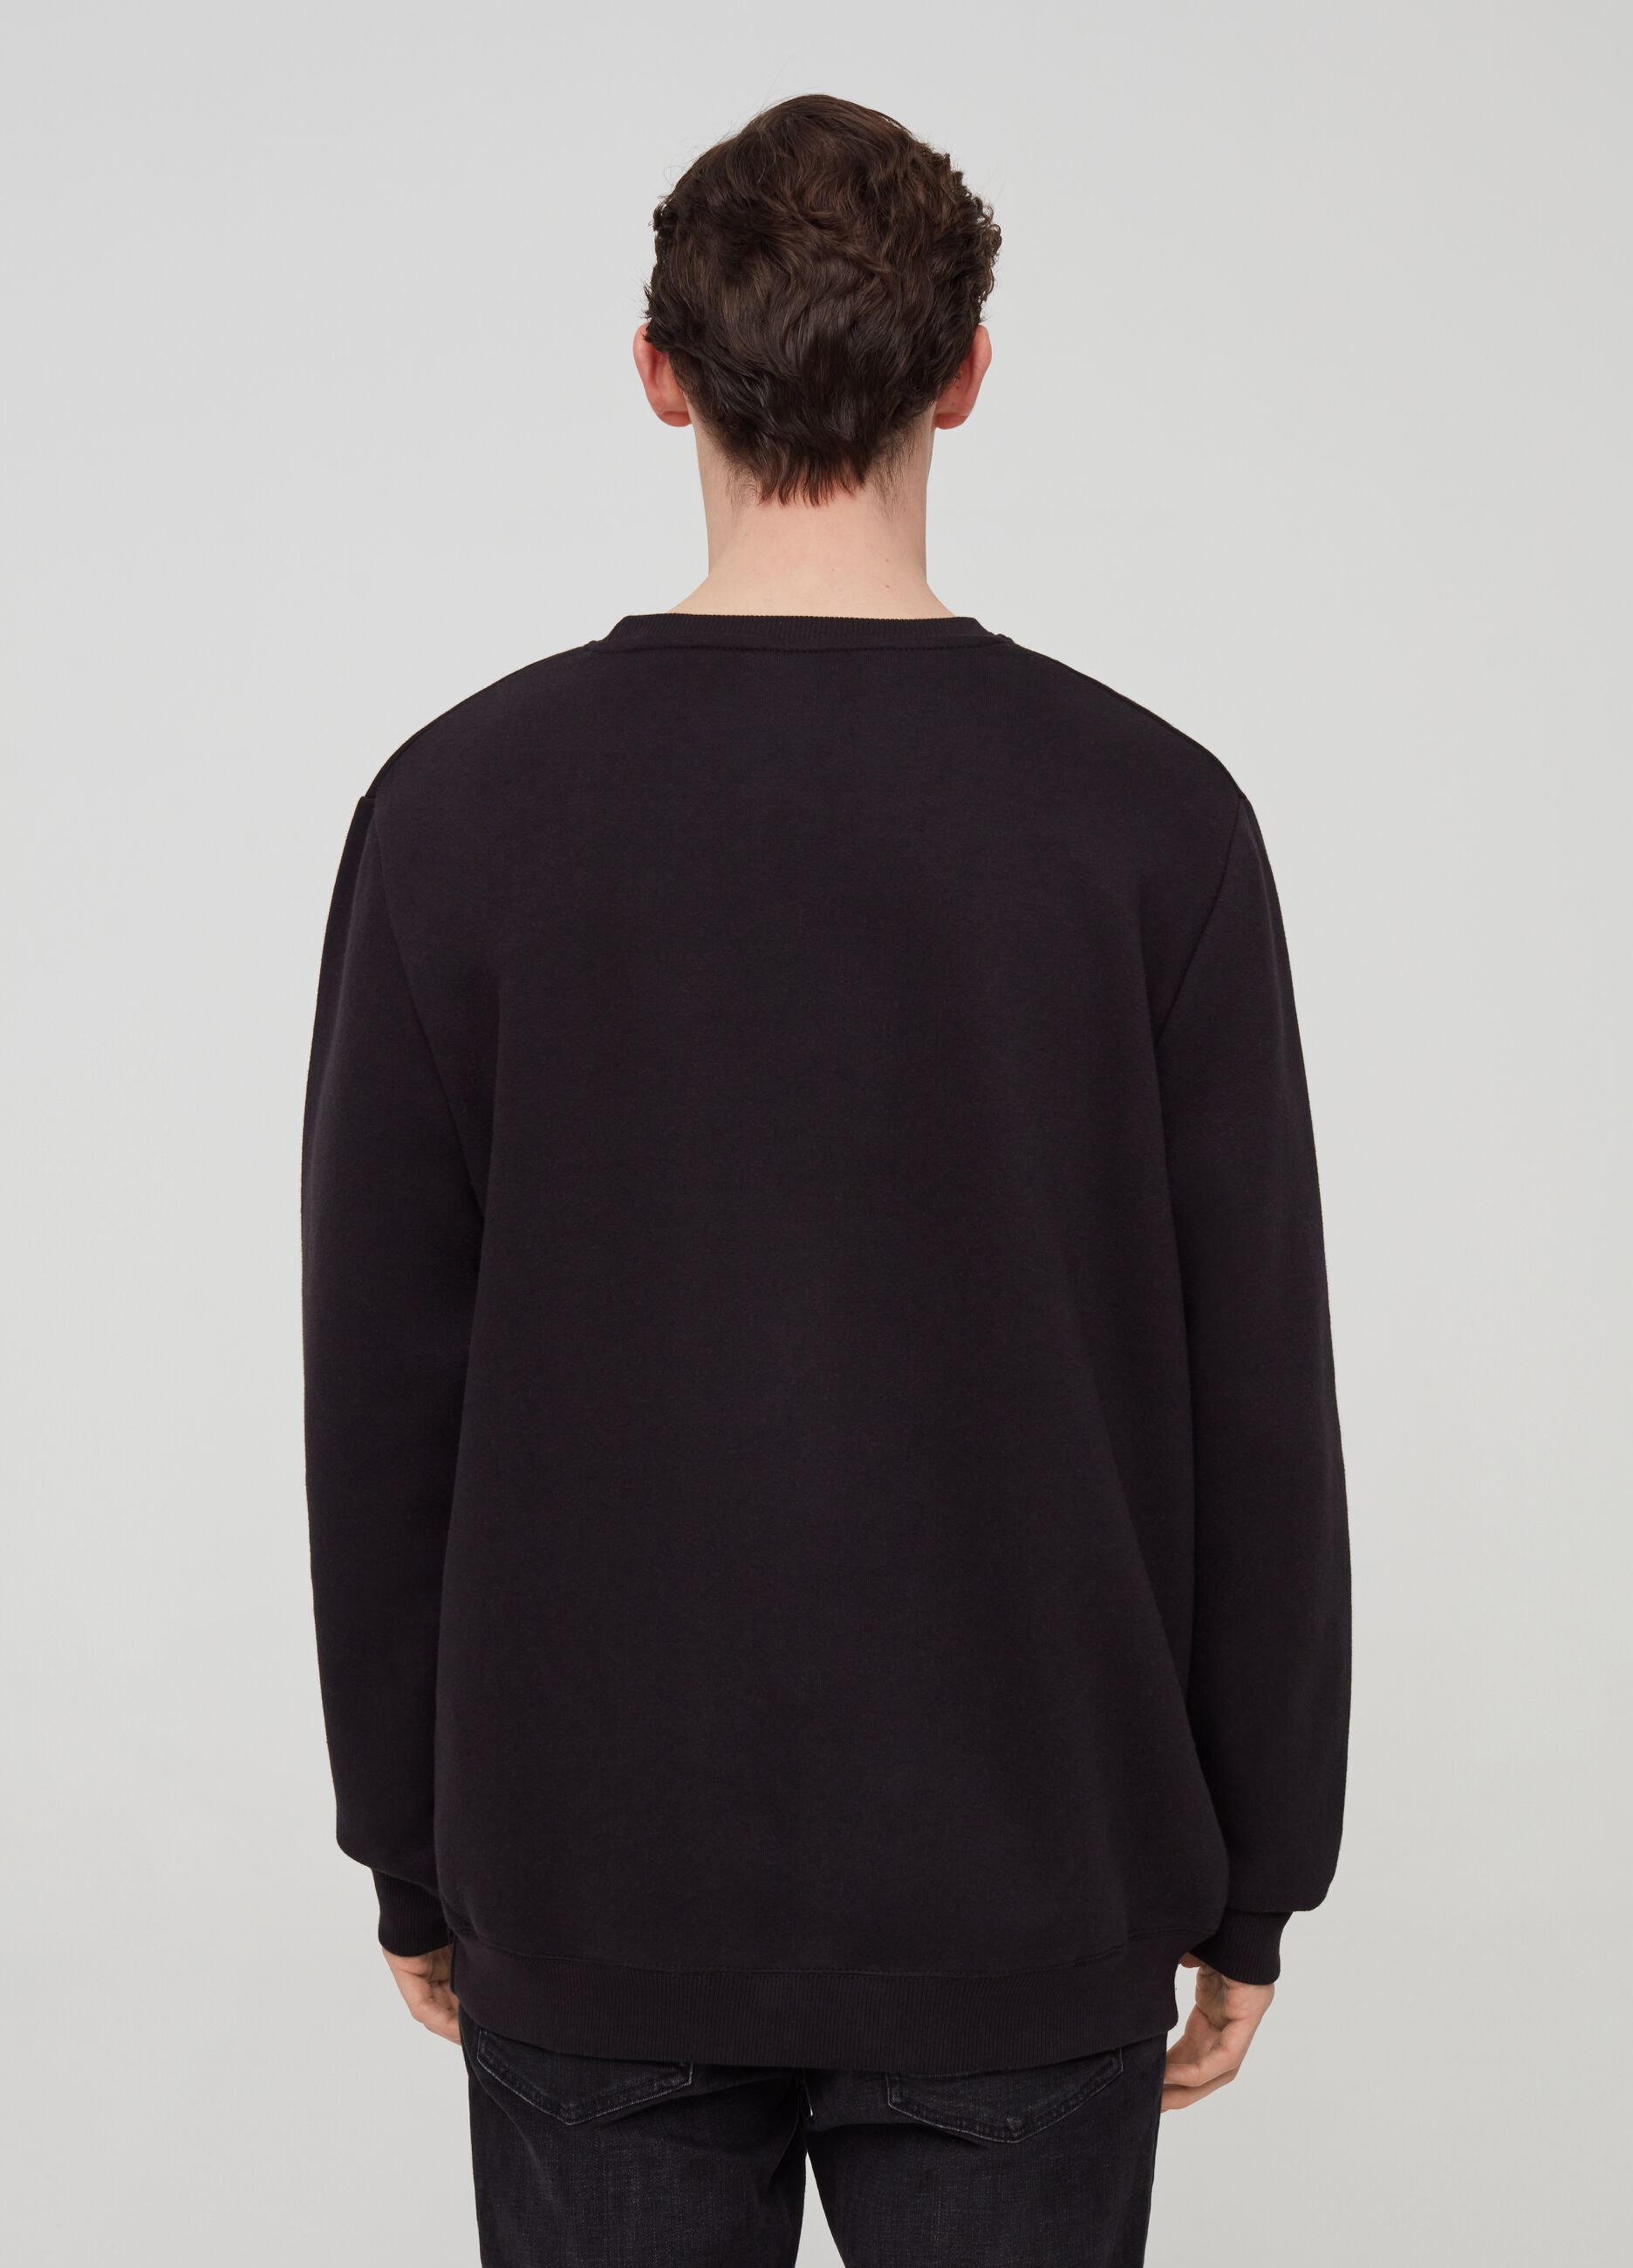 Round neck sweatshirt with drop shoulder and print